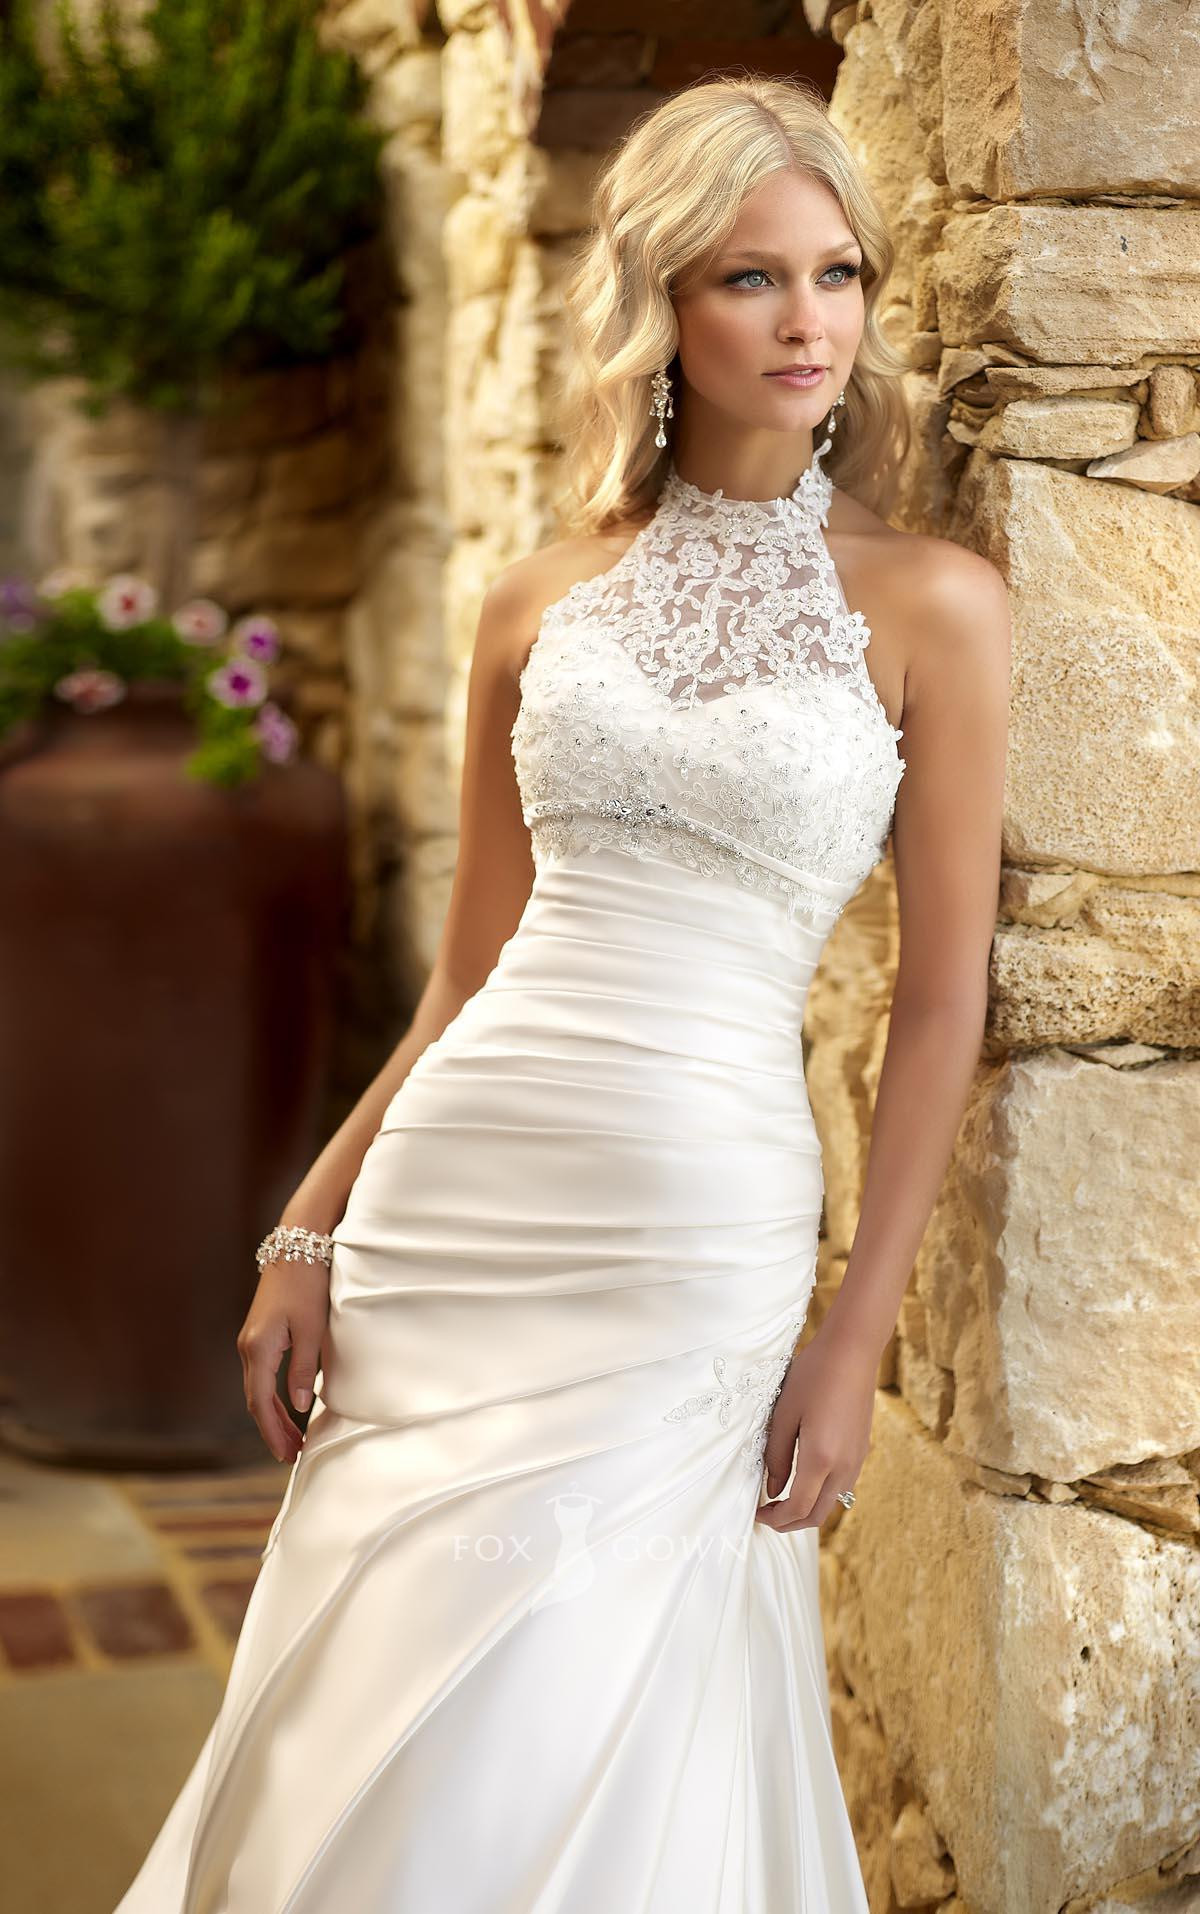 Lace Top Wedding Dress
 Ten Beautiful Lace Wedding Dresses – BestBride101